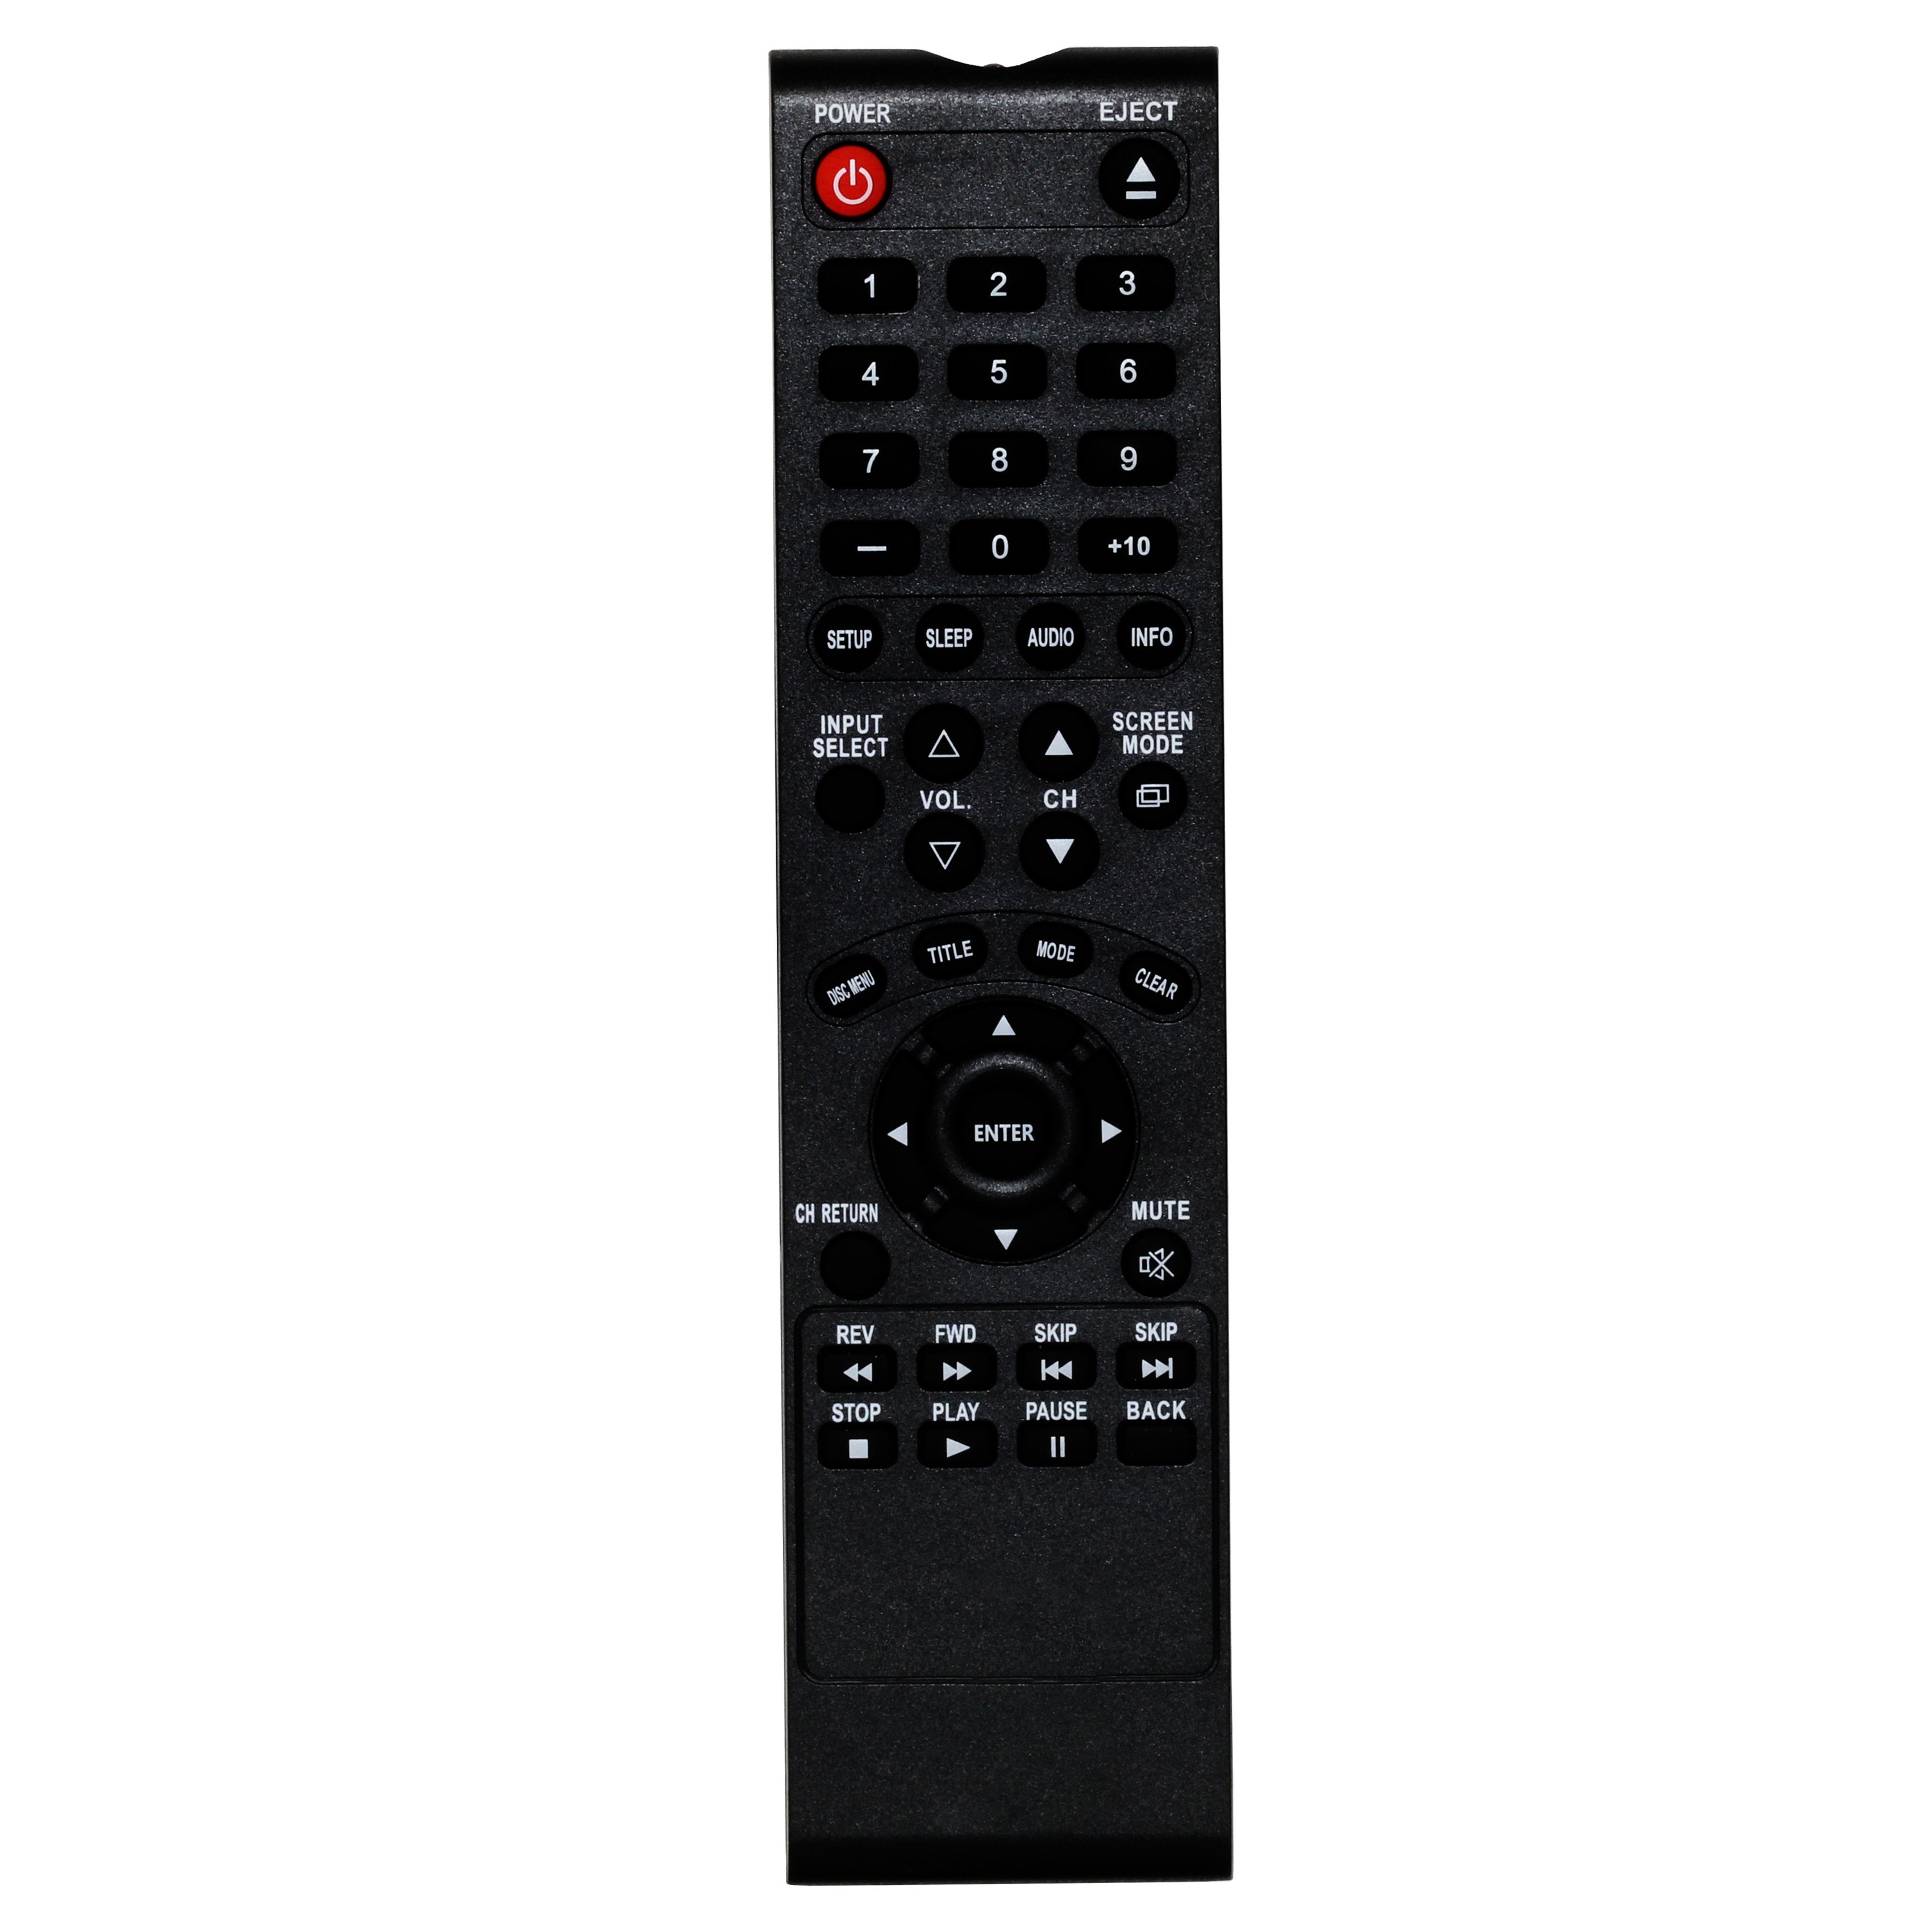 Sylvania RLX310  TV Remote